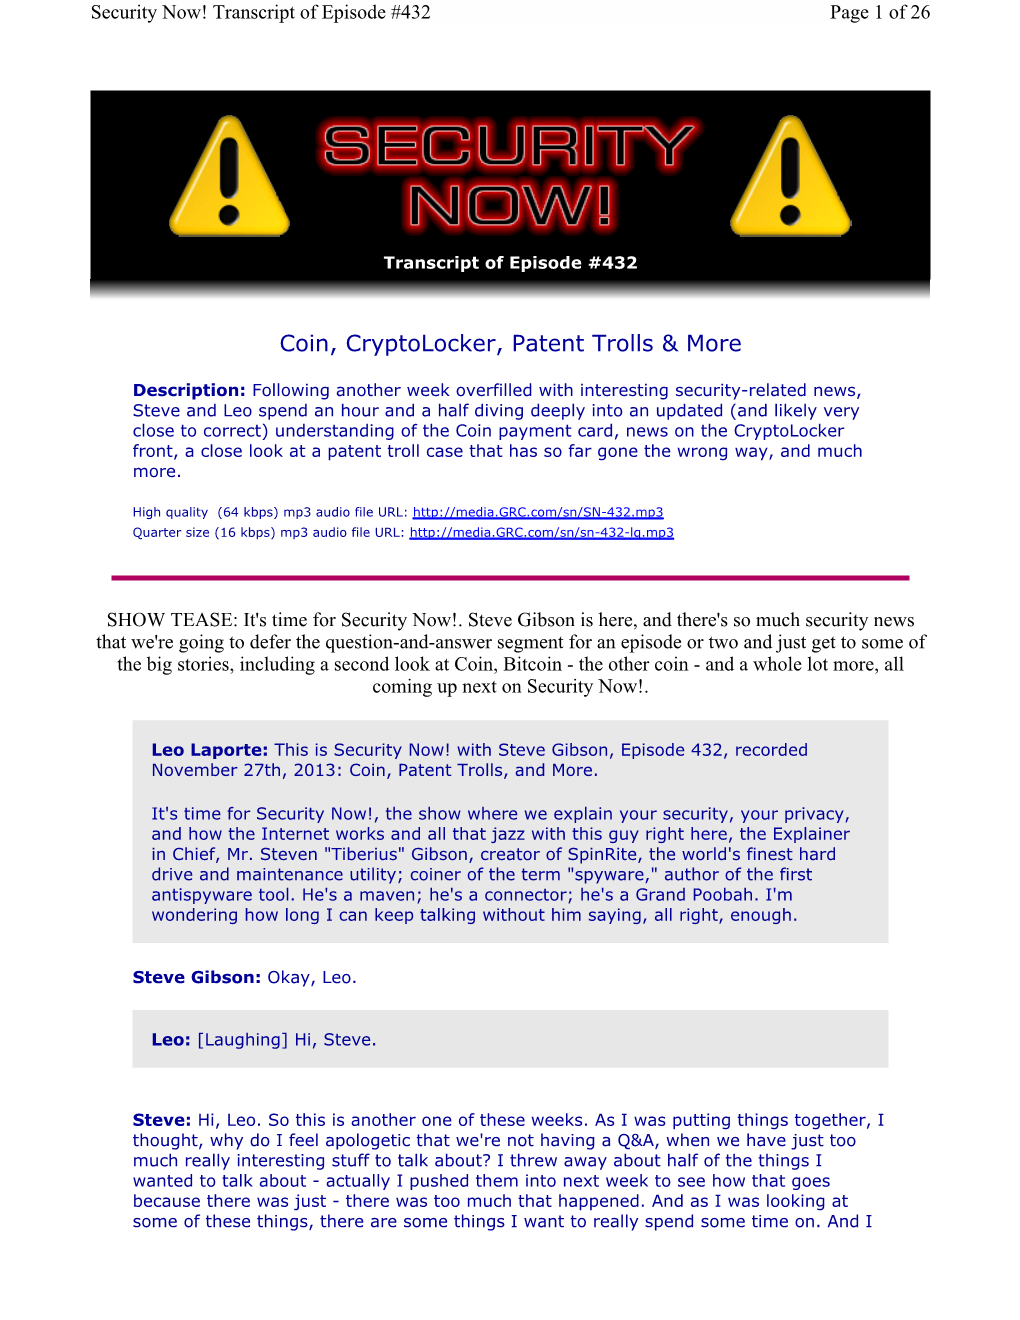 Coin, Cryptolocker, Patent Trolls & More